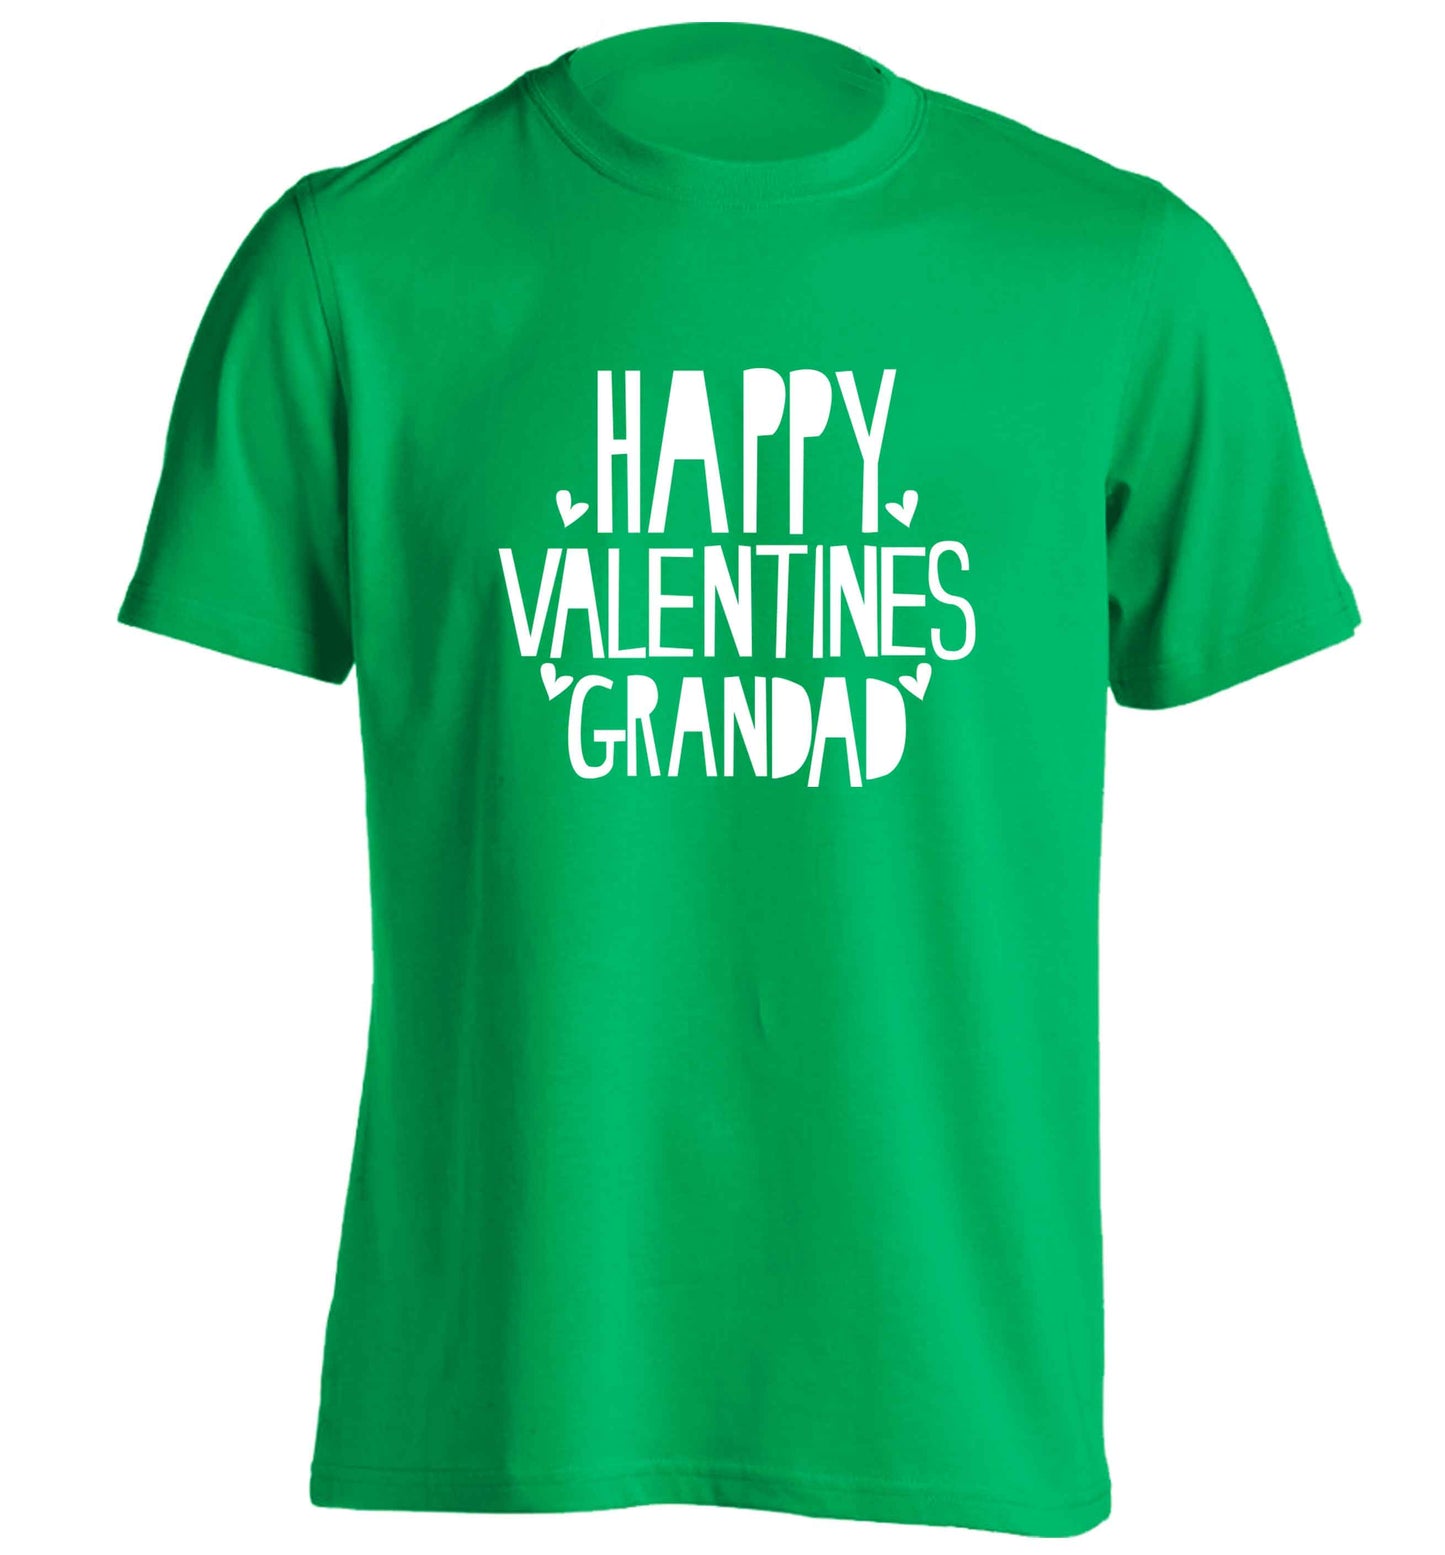 Happy valentines grandad adults unisex green Tshirt 2XL